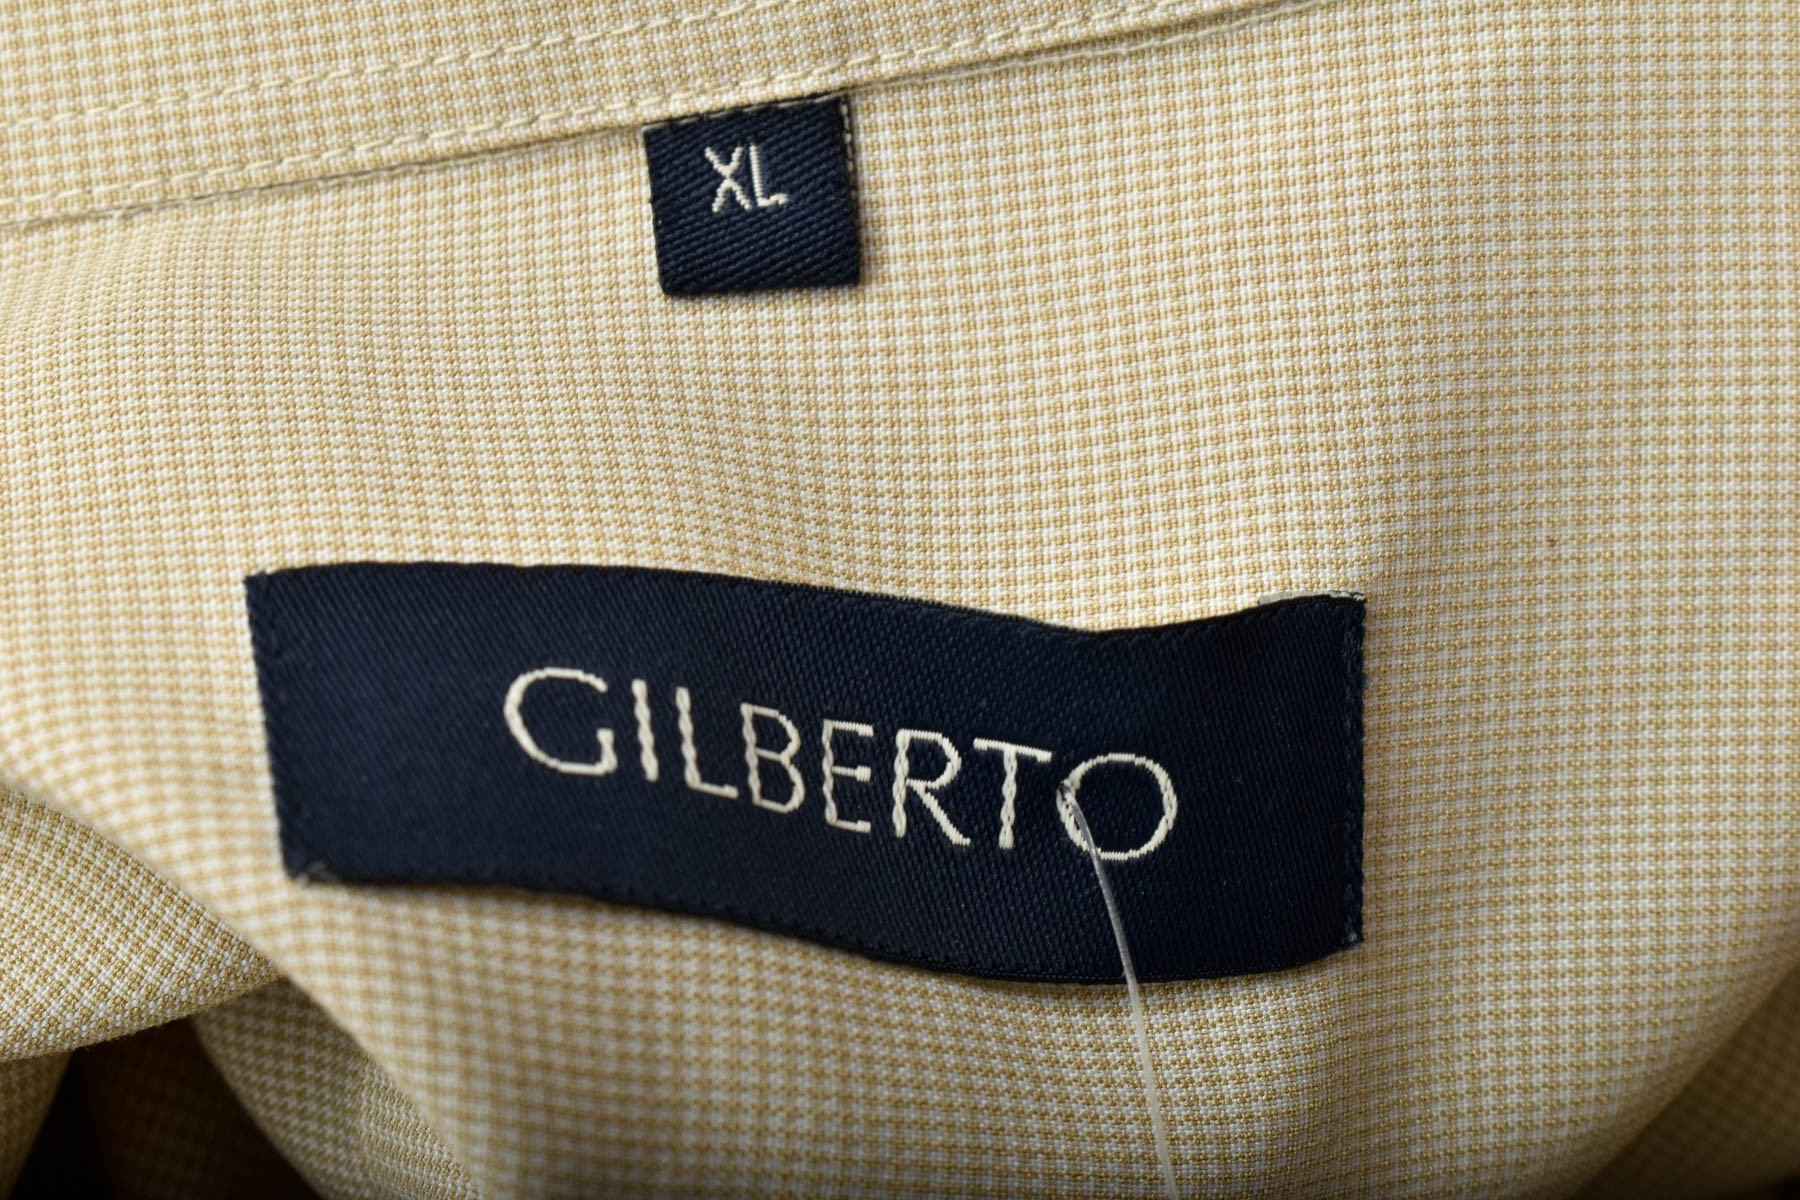 Men's shirt - Gilberto - 2